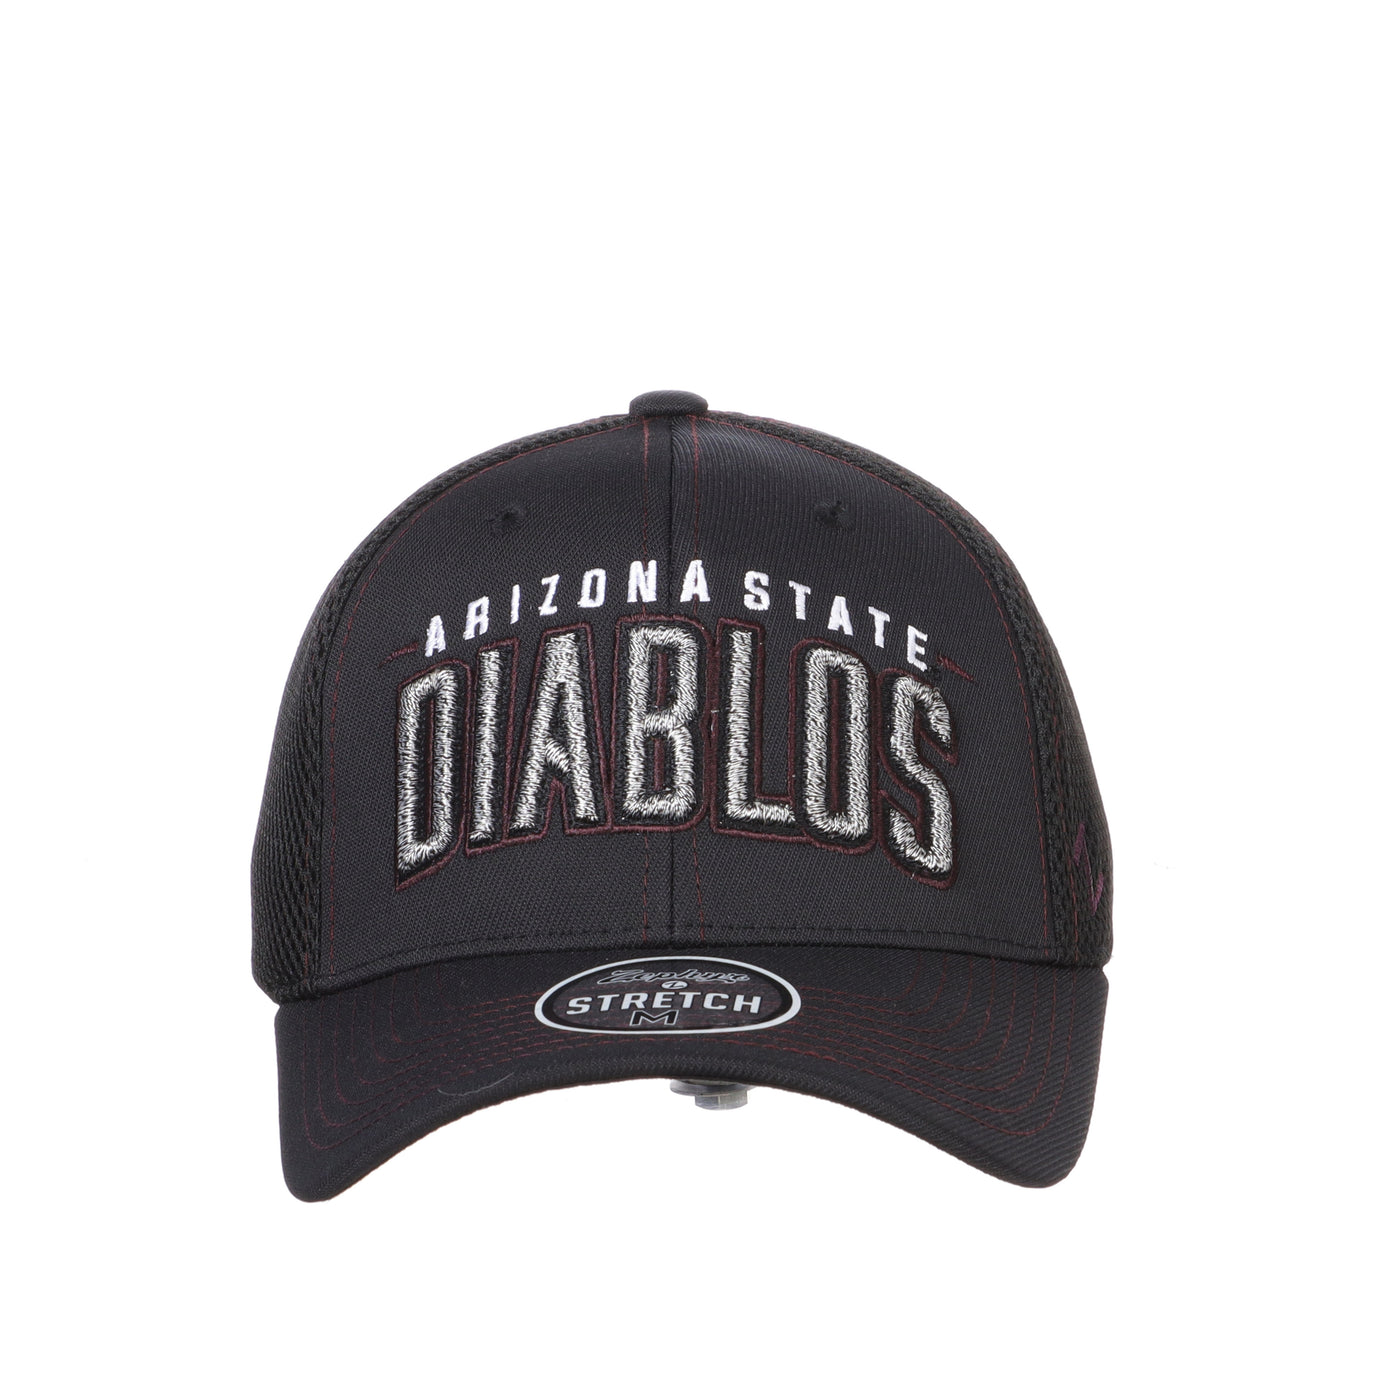 ASU black stretch fit hat with 'Arizona State' above 'Diablos'